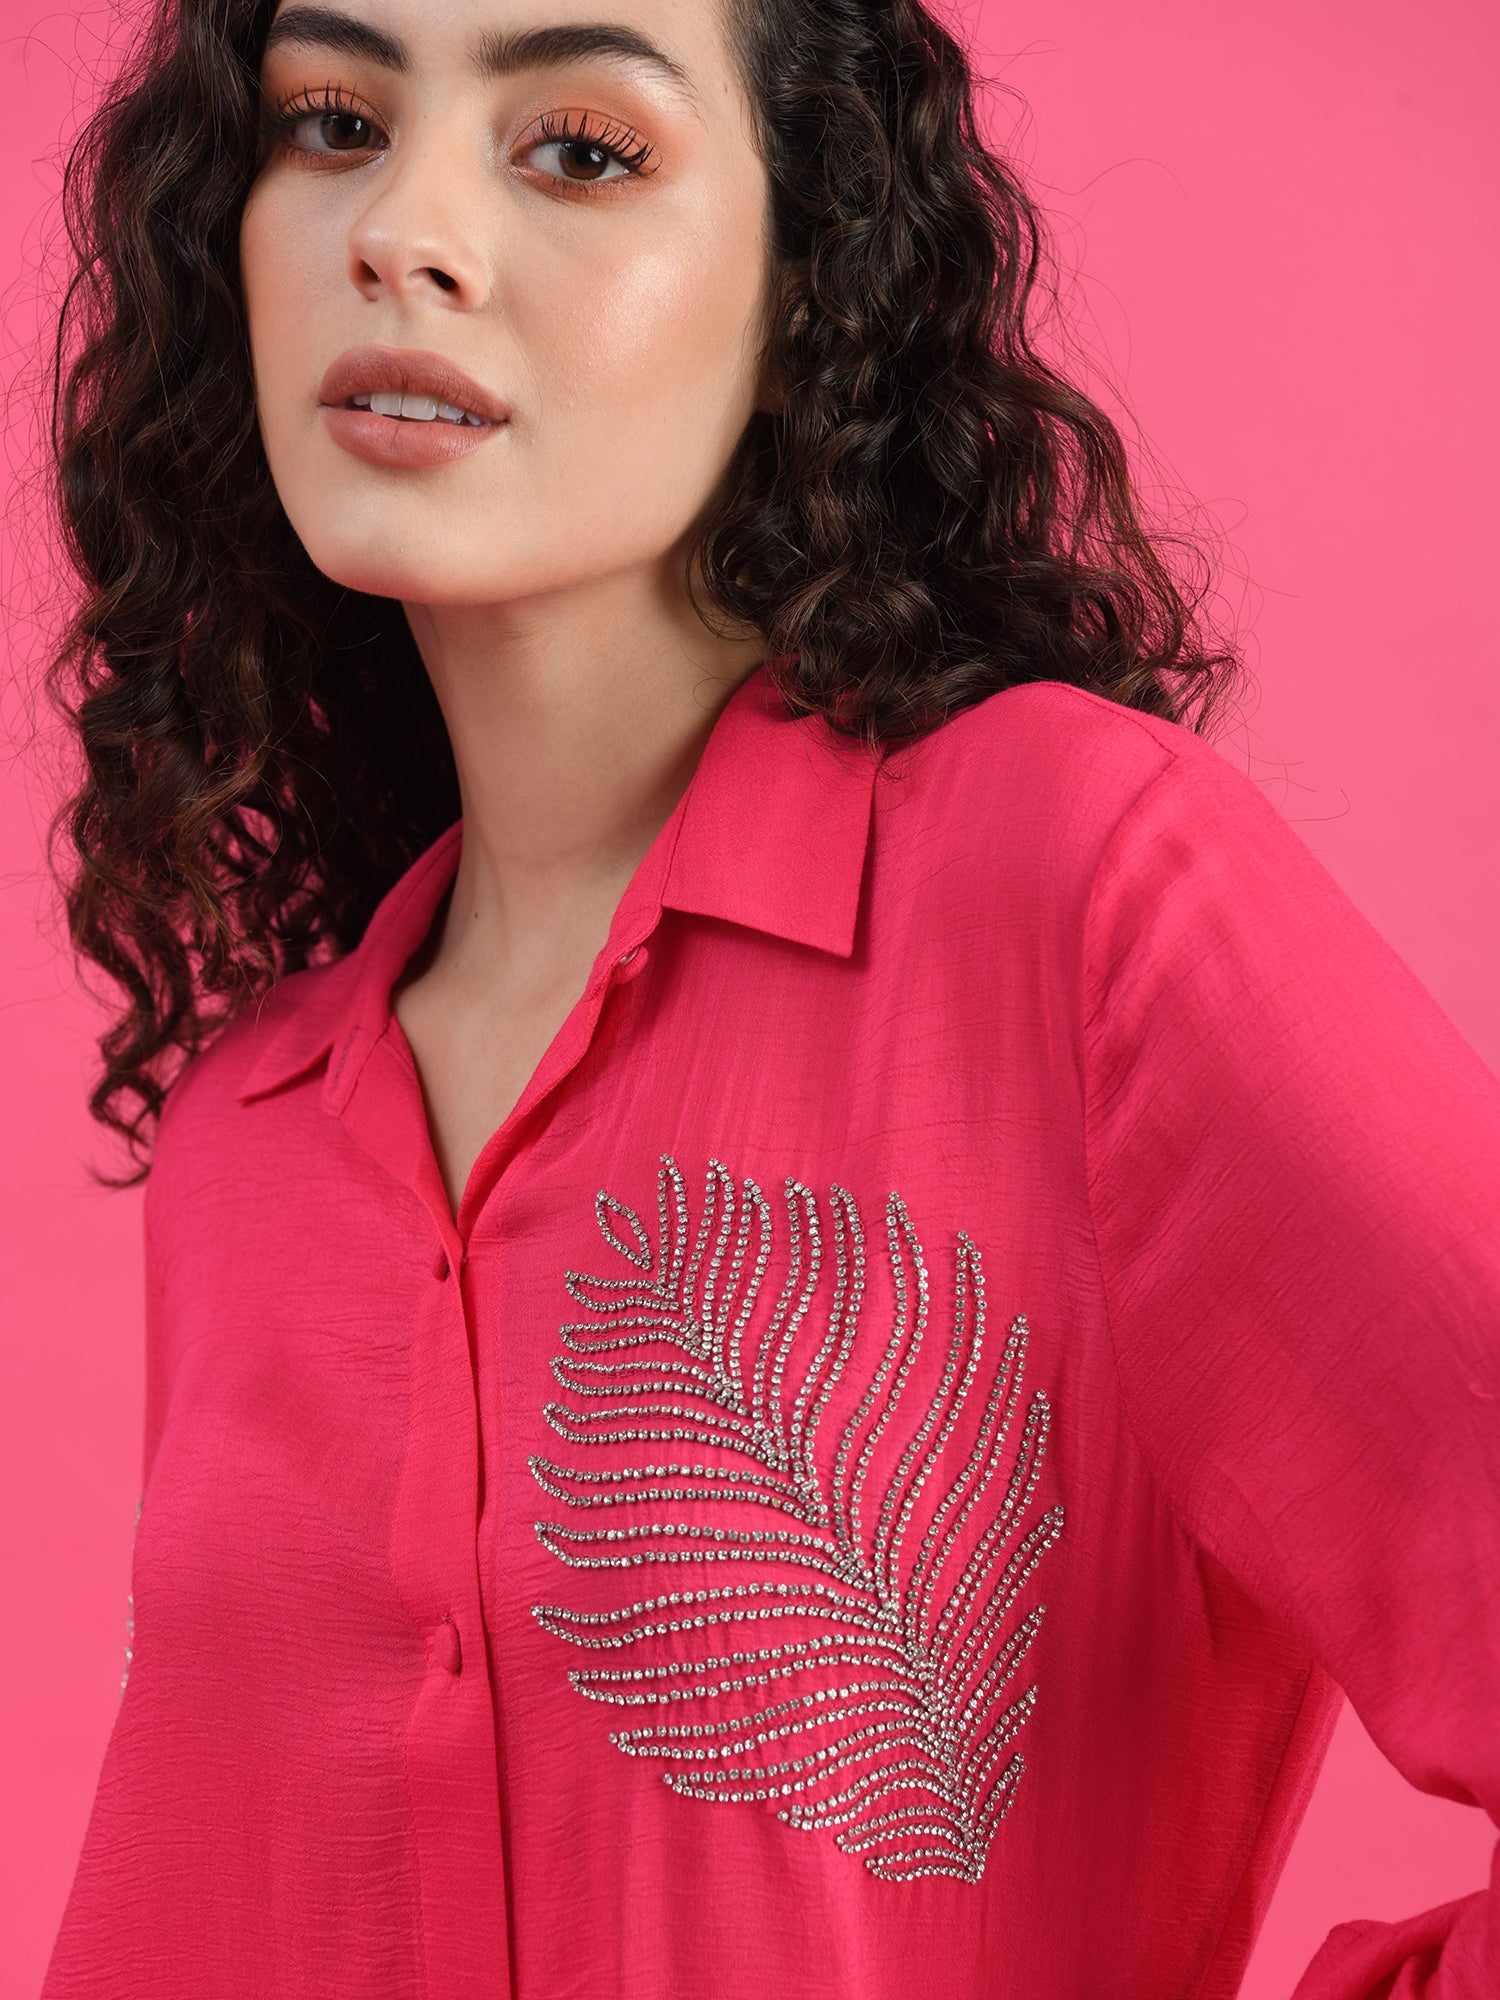 deluxe embellished fuchsia pink shirt